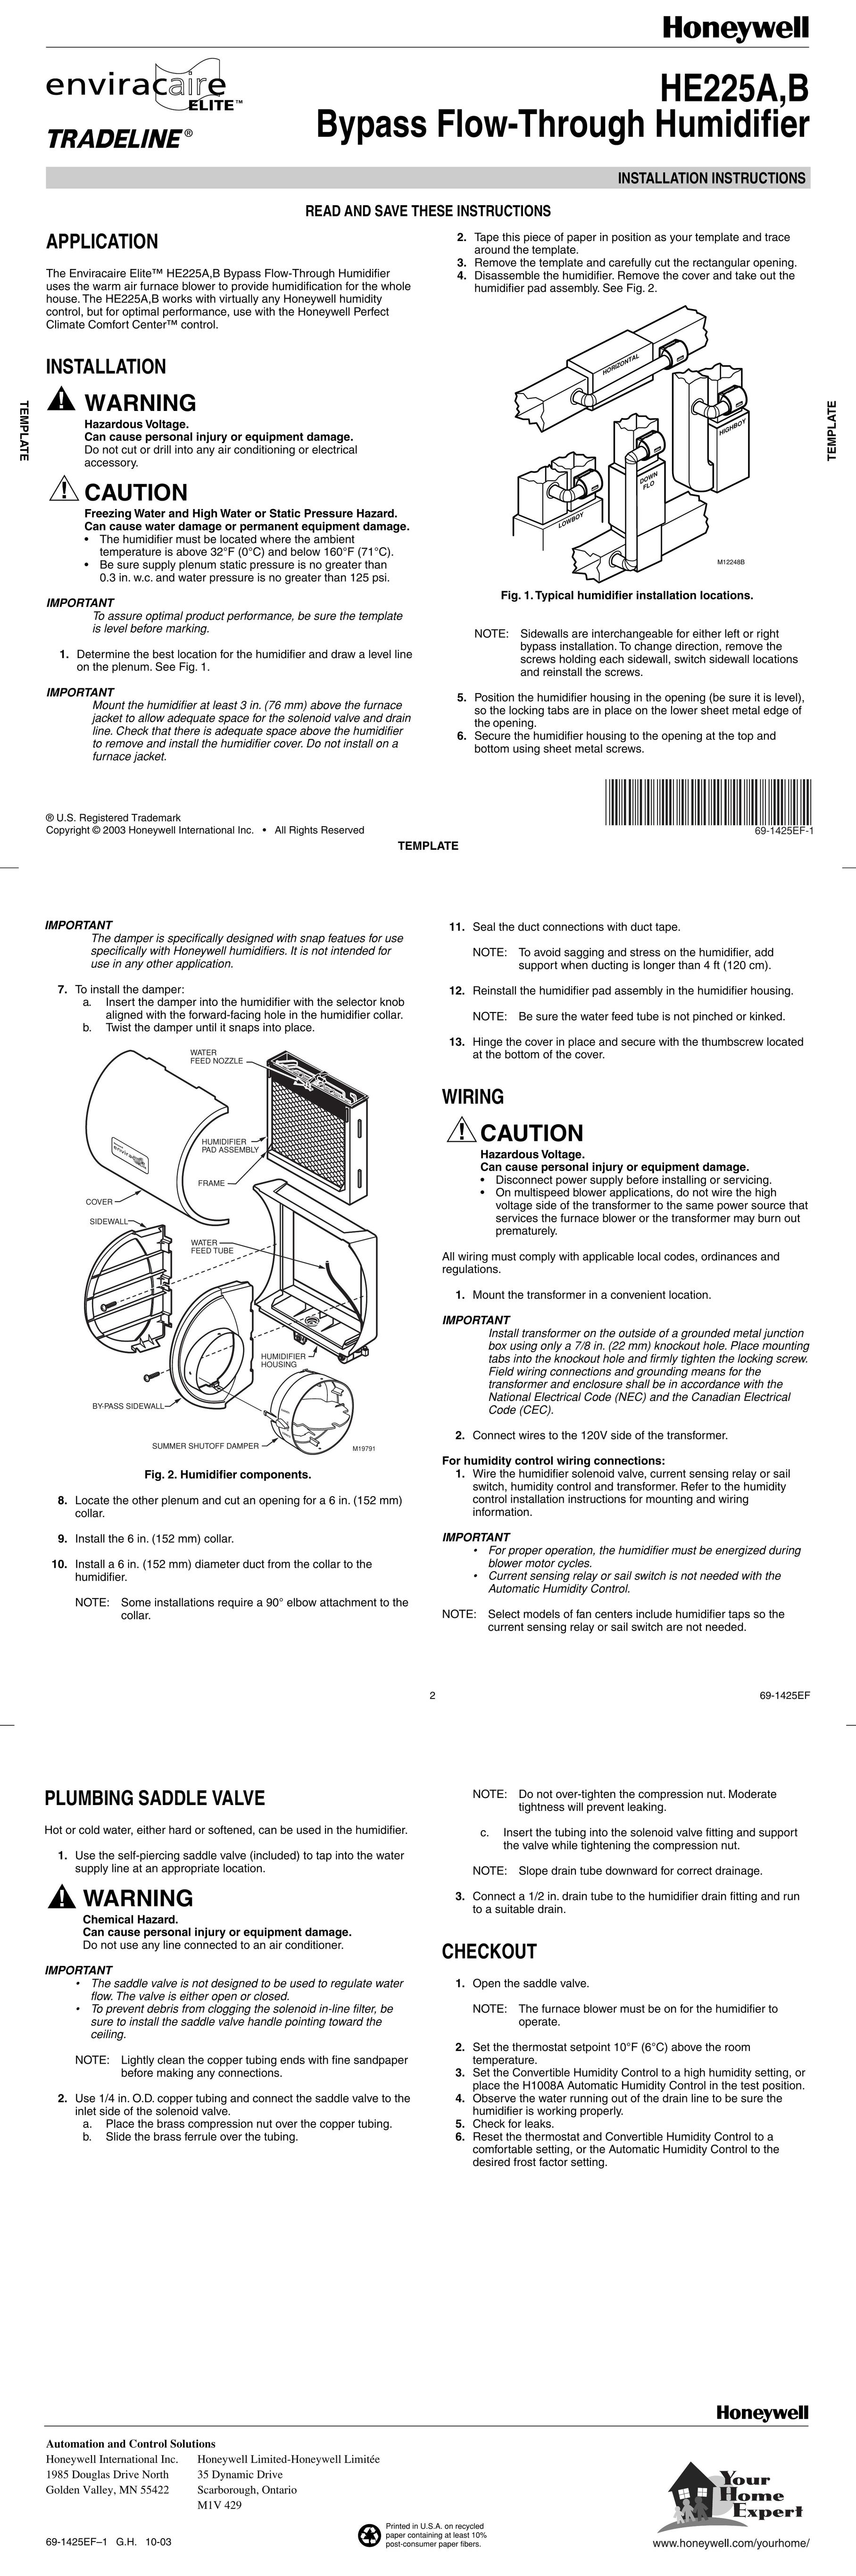 Honeywell 225A Humidifier User Manual